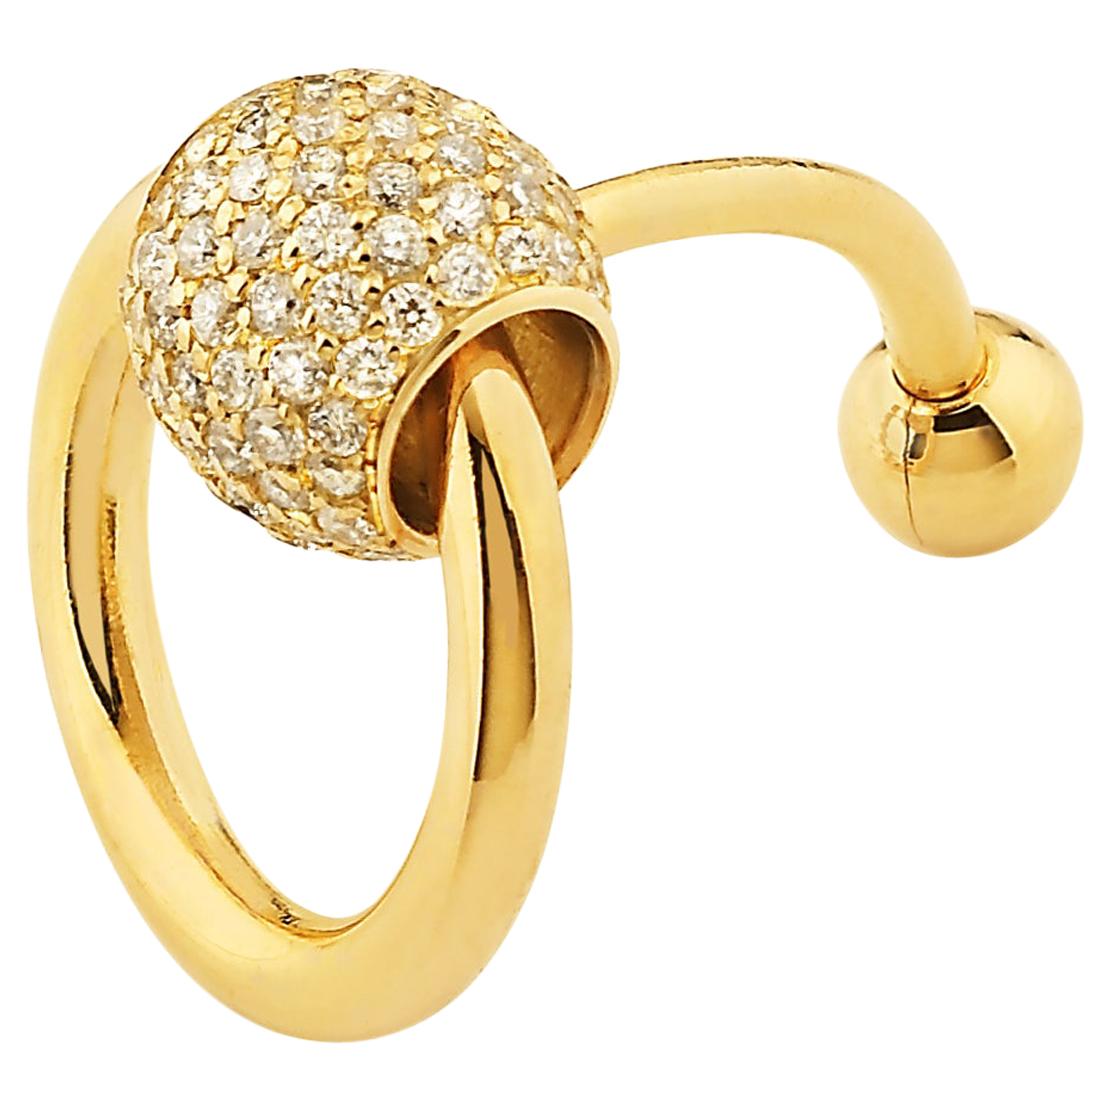 Betony Vernon "O-Ring Bauchnabelpiercing" Piercing 18K Gold Pavée Diamant